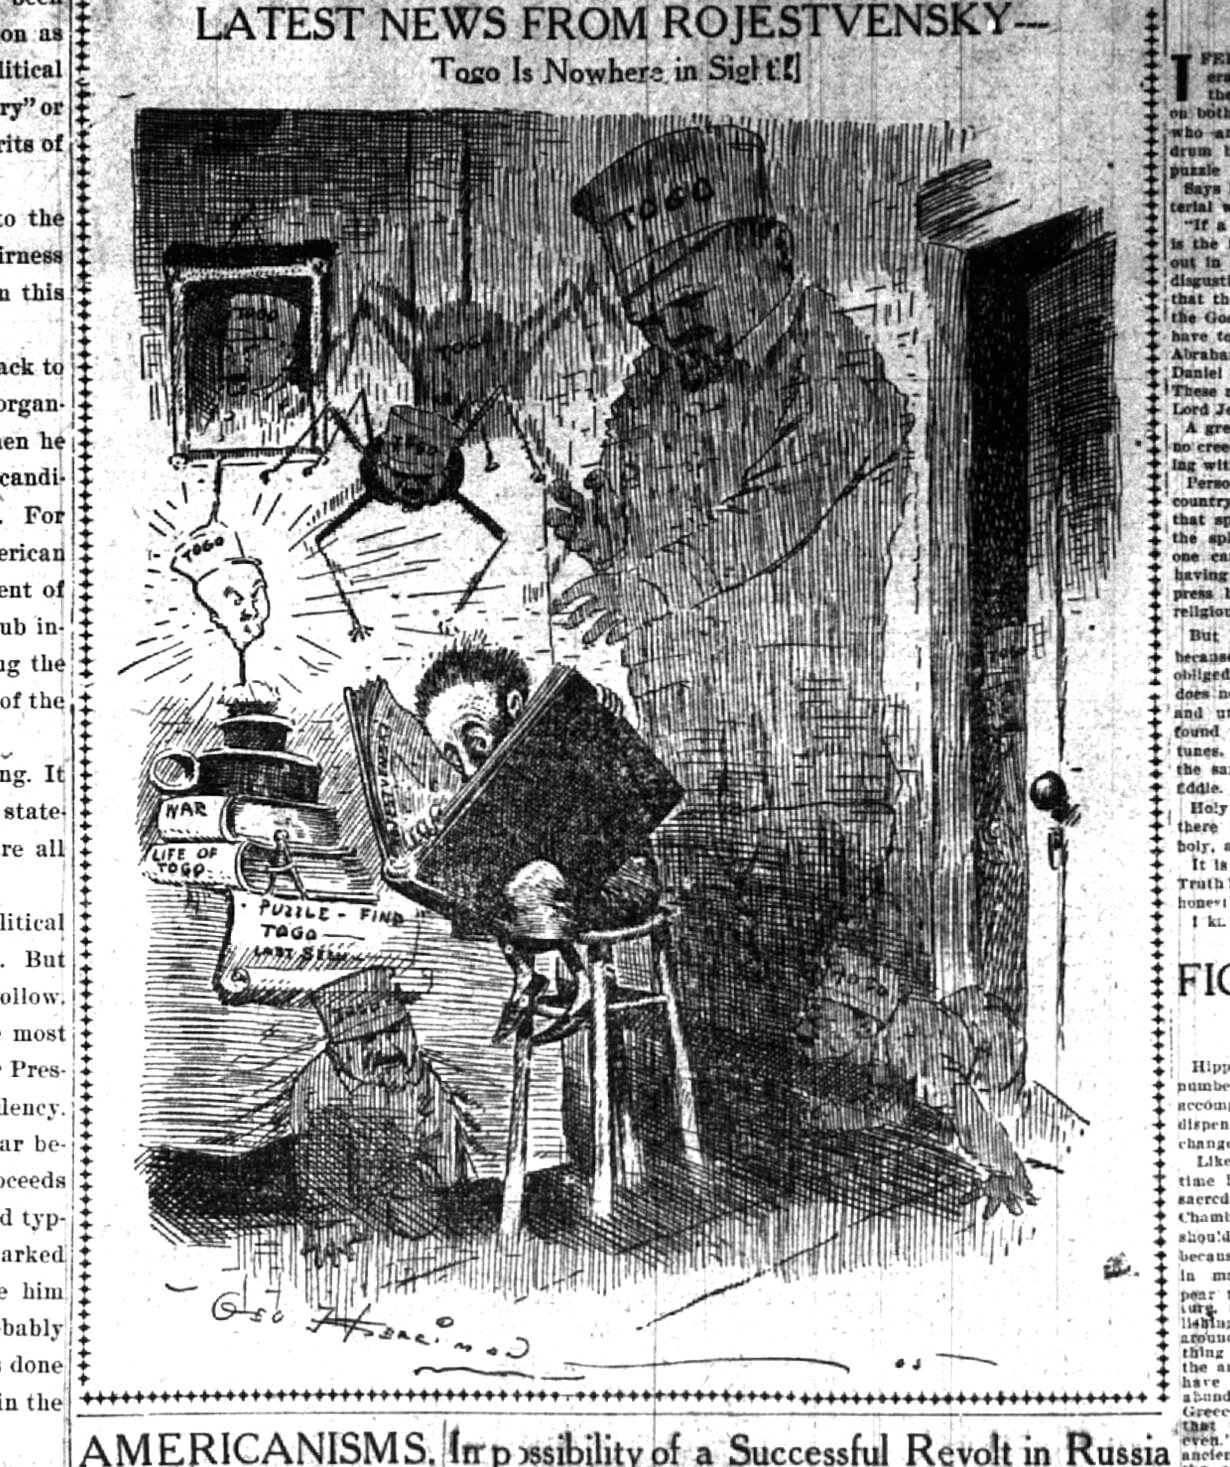 07-1905-05-13-nya-herriman-editorial-cartoon.jpg